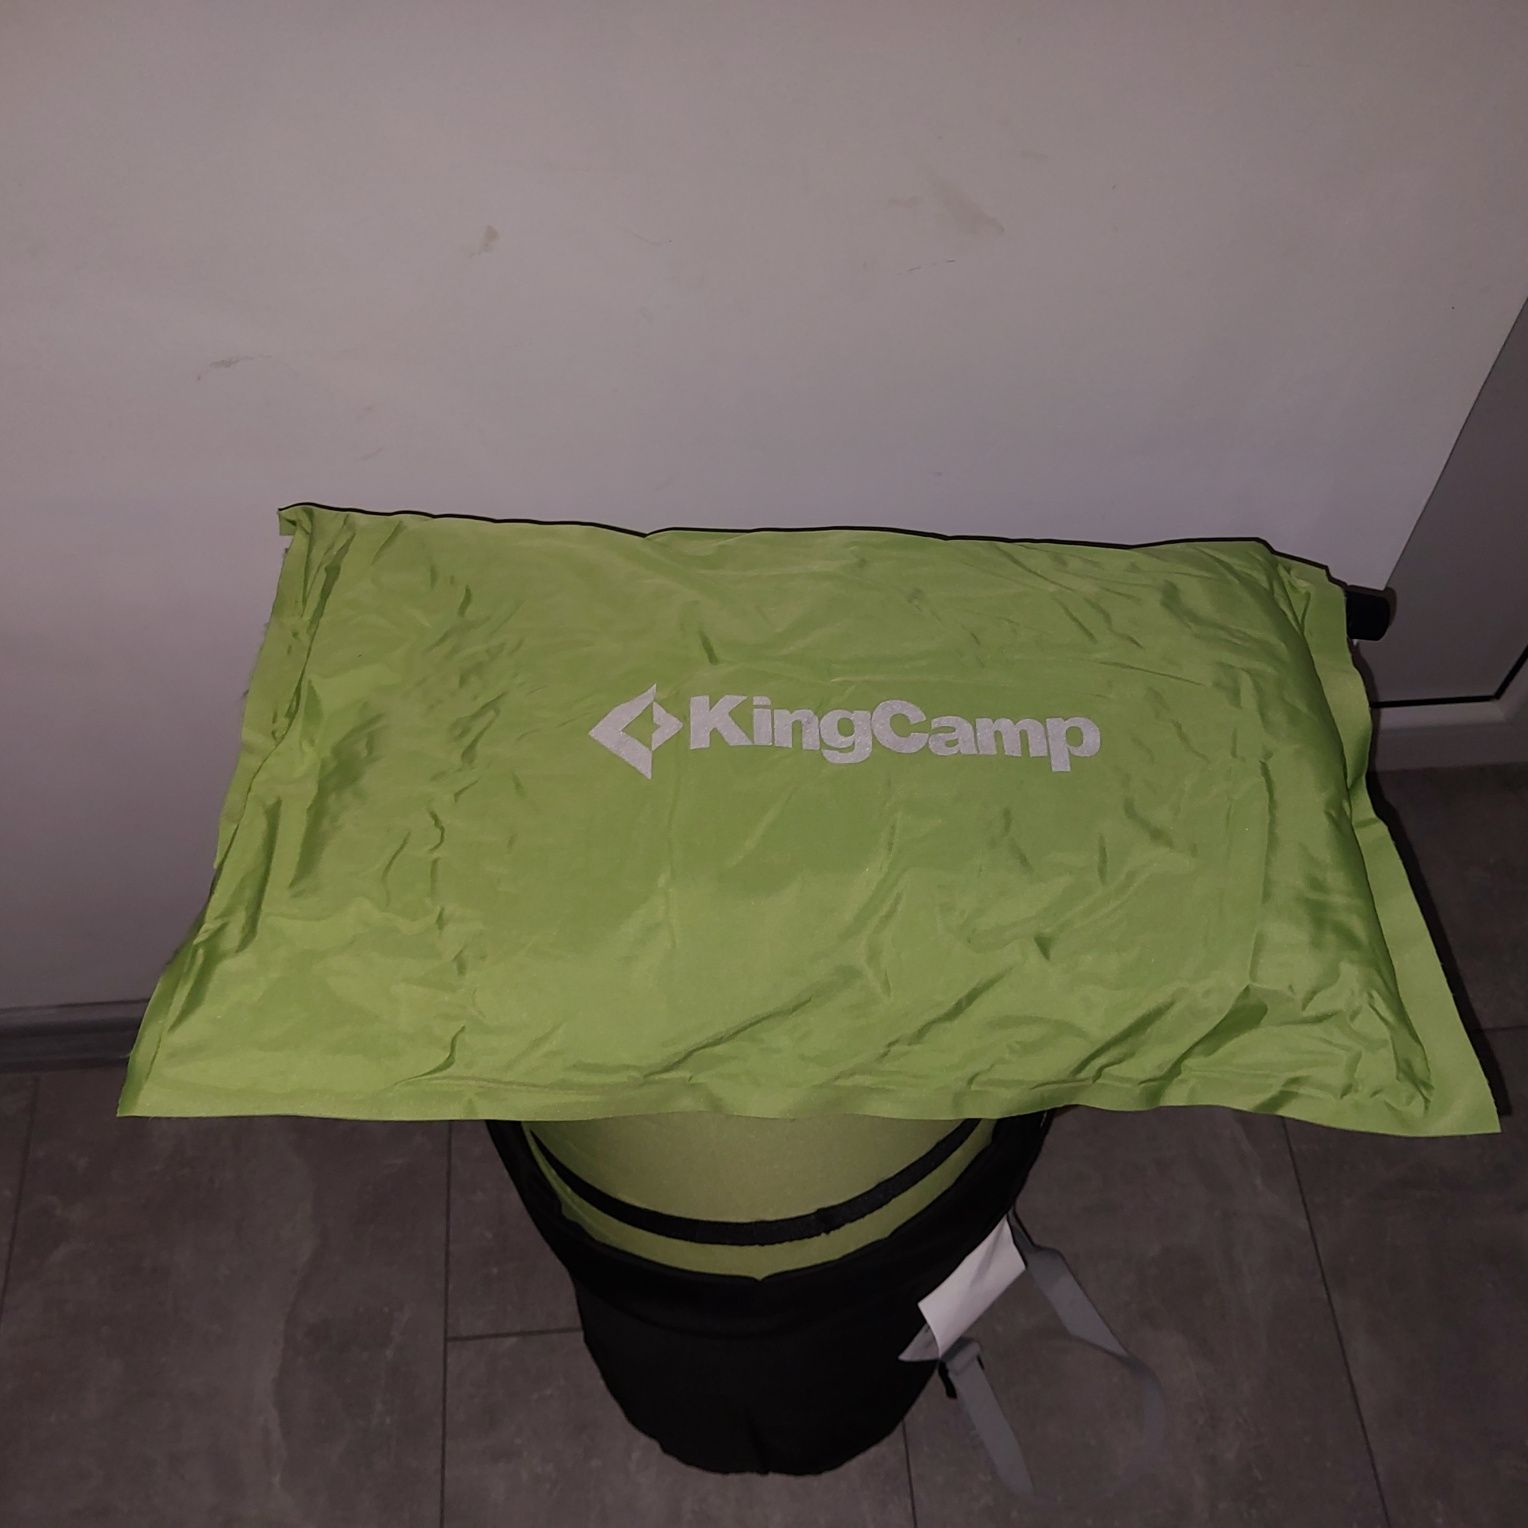 Mata materac samopompujacy king camp plus 2 poduszki